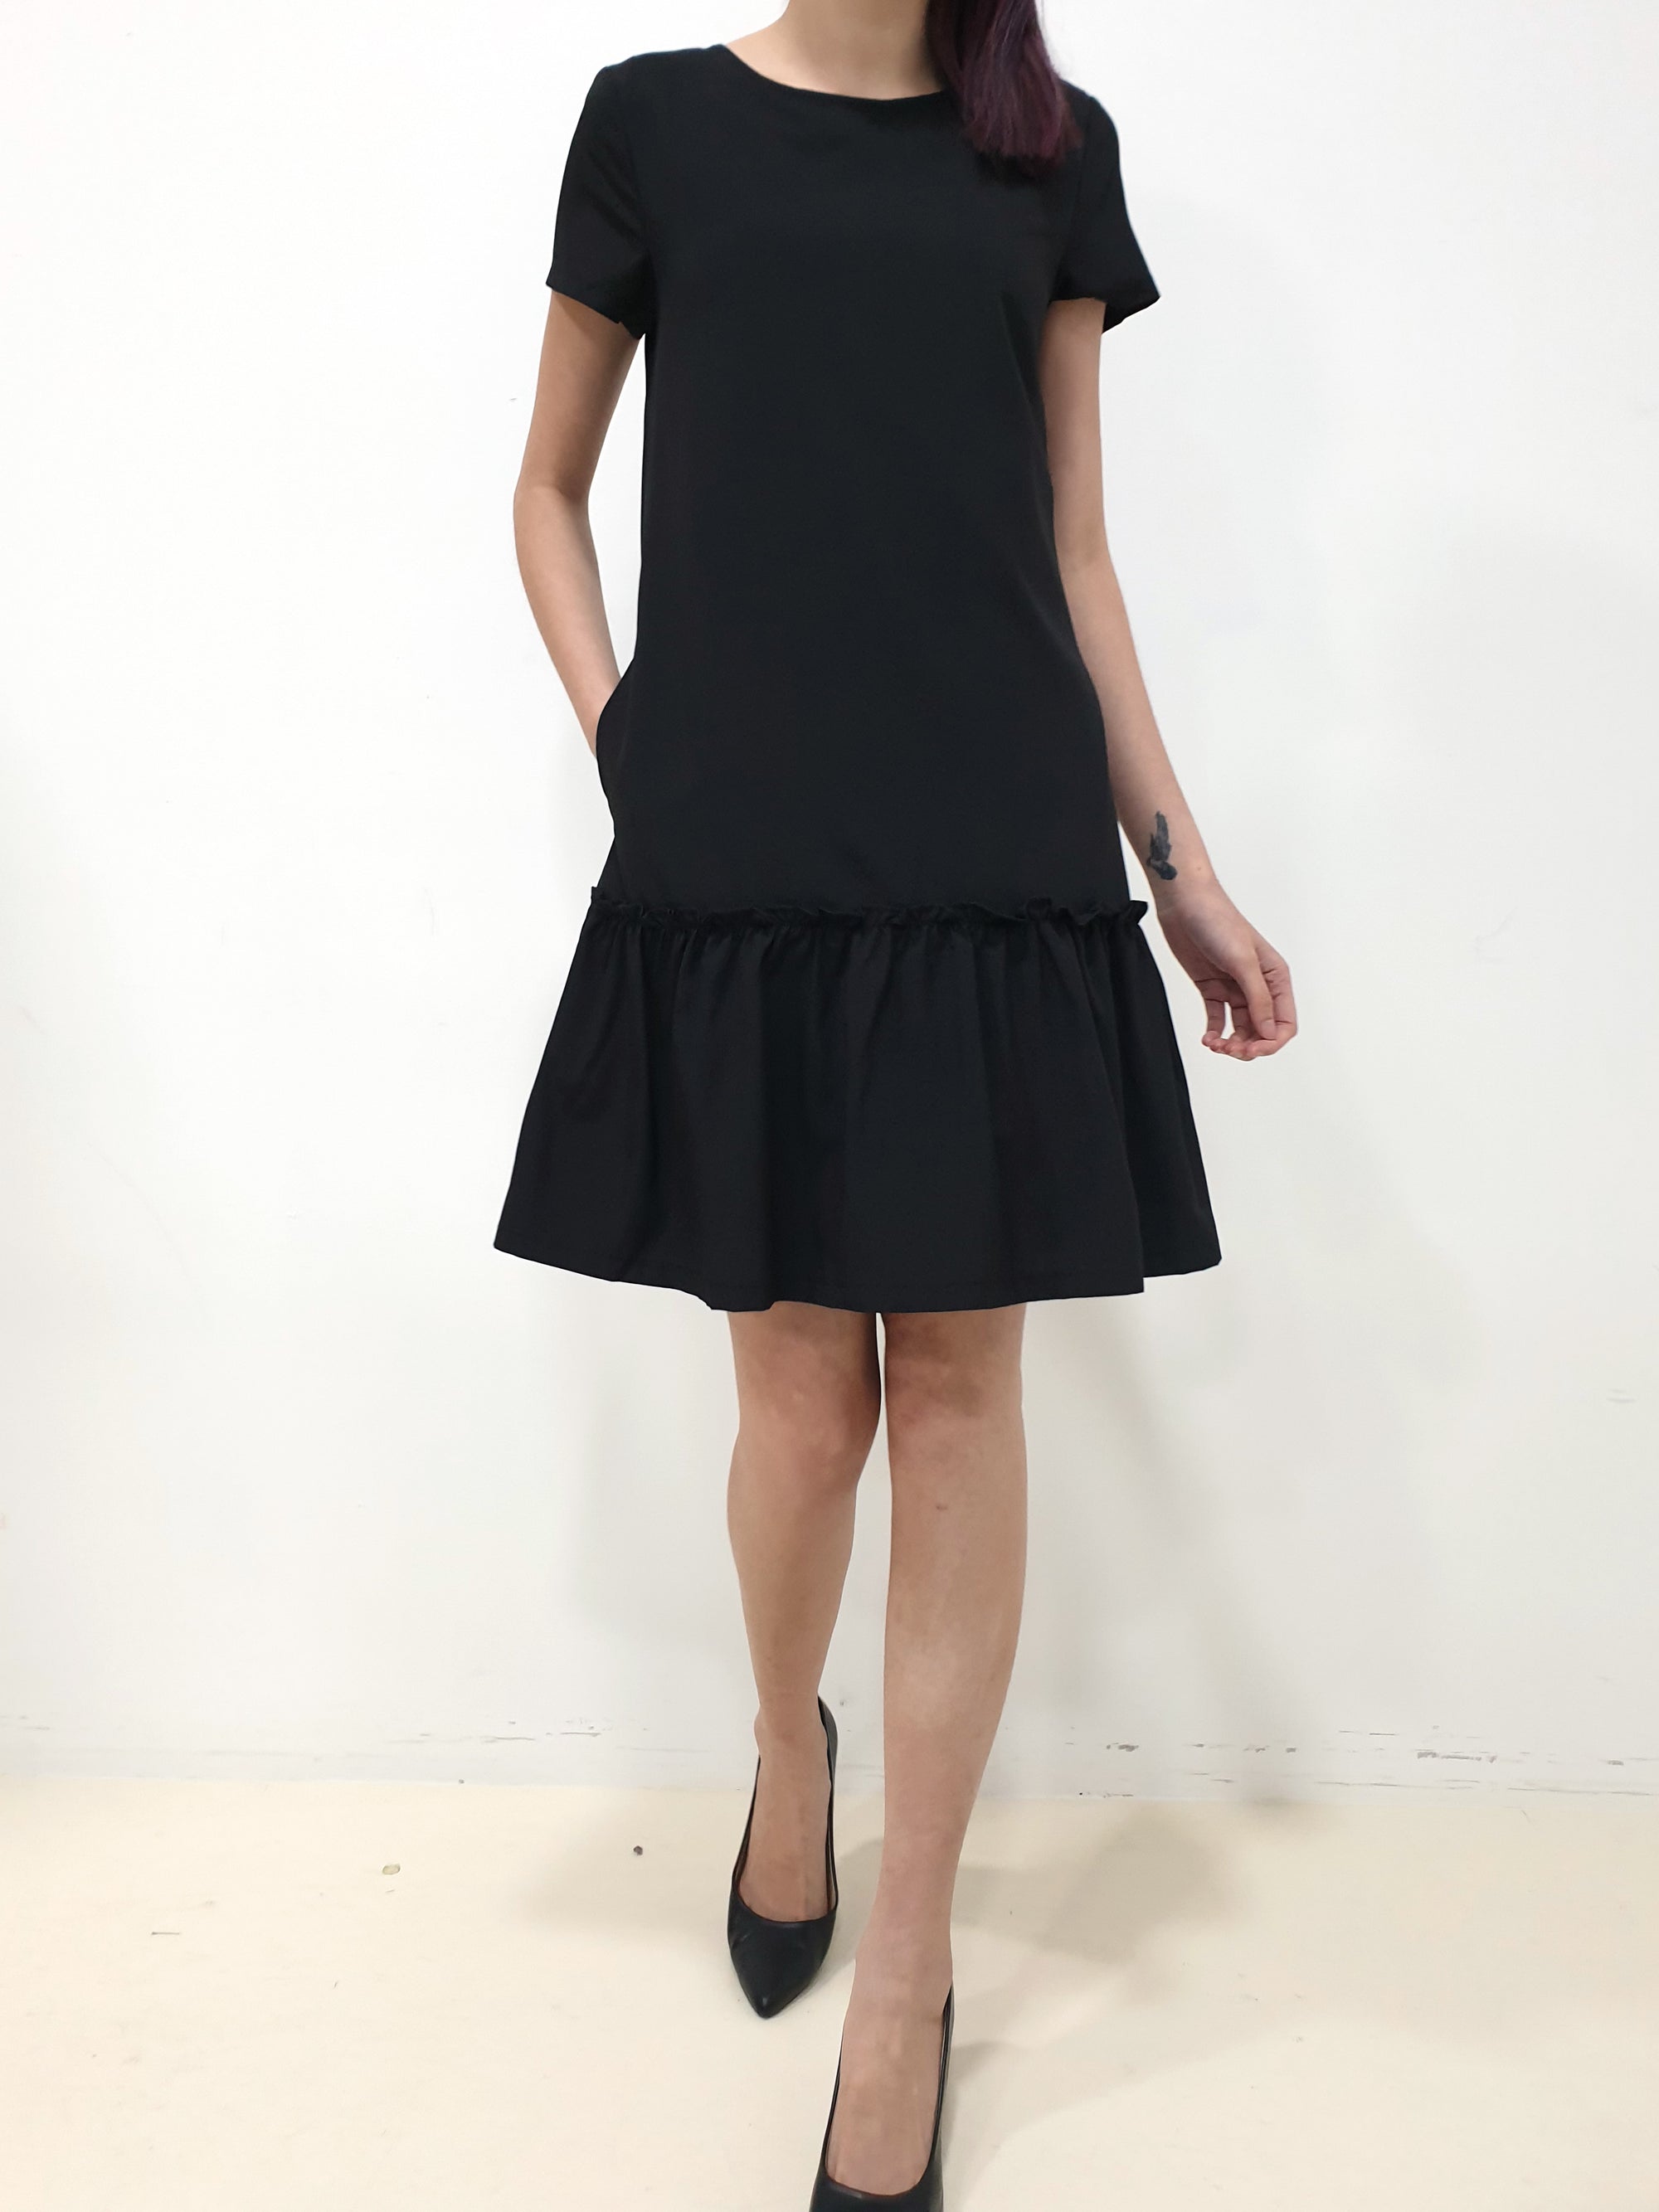 Sleeved Gathered Hem Dress - Black (Non-returnable) - Ferlicious